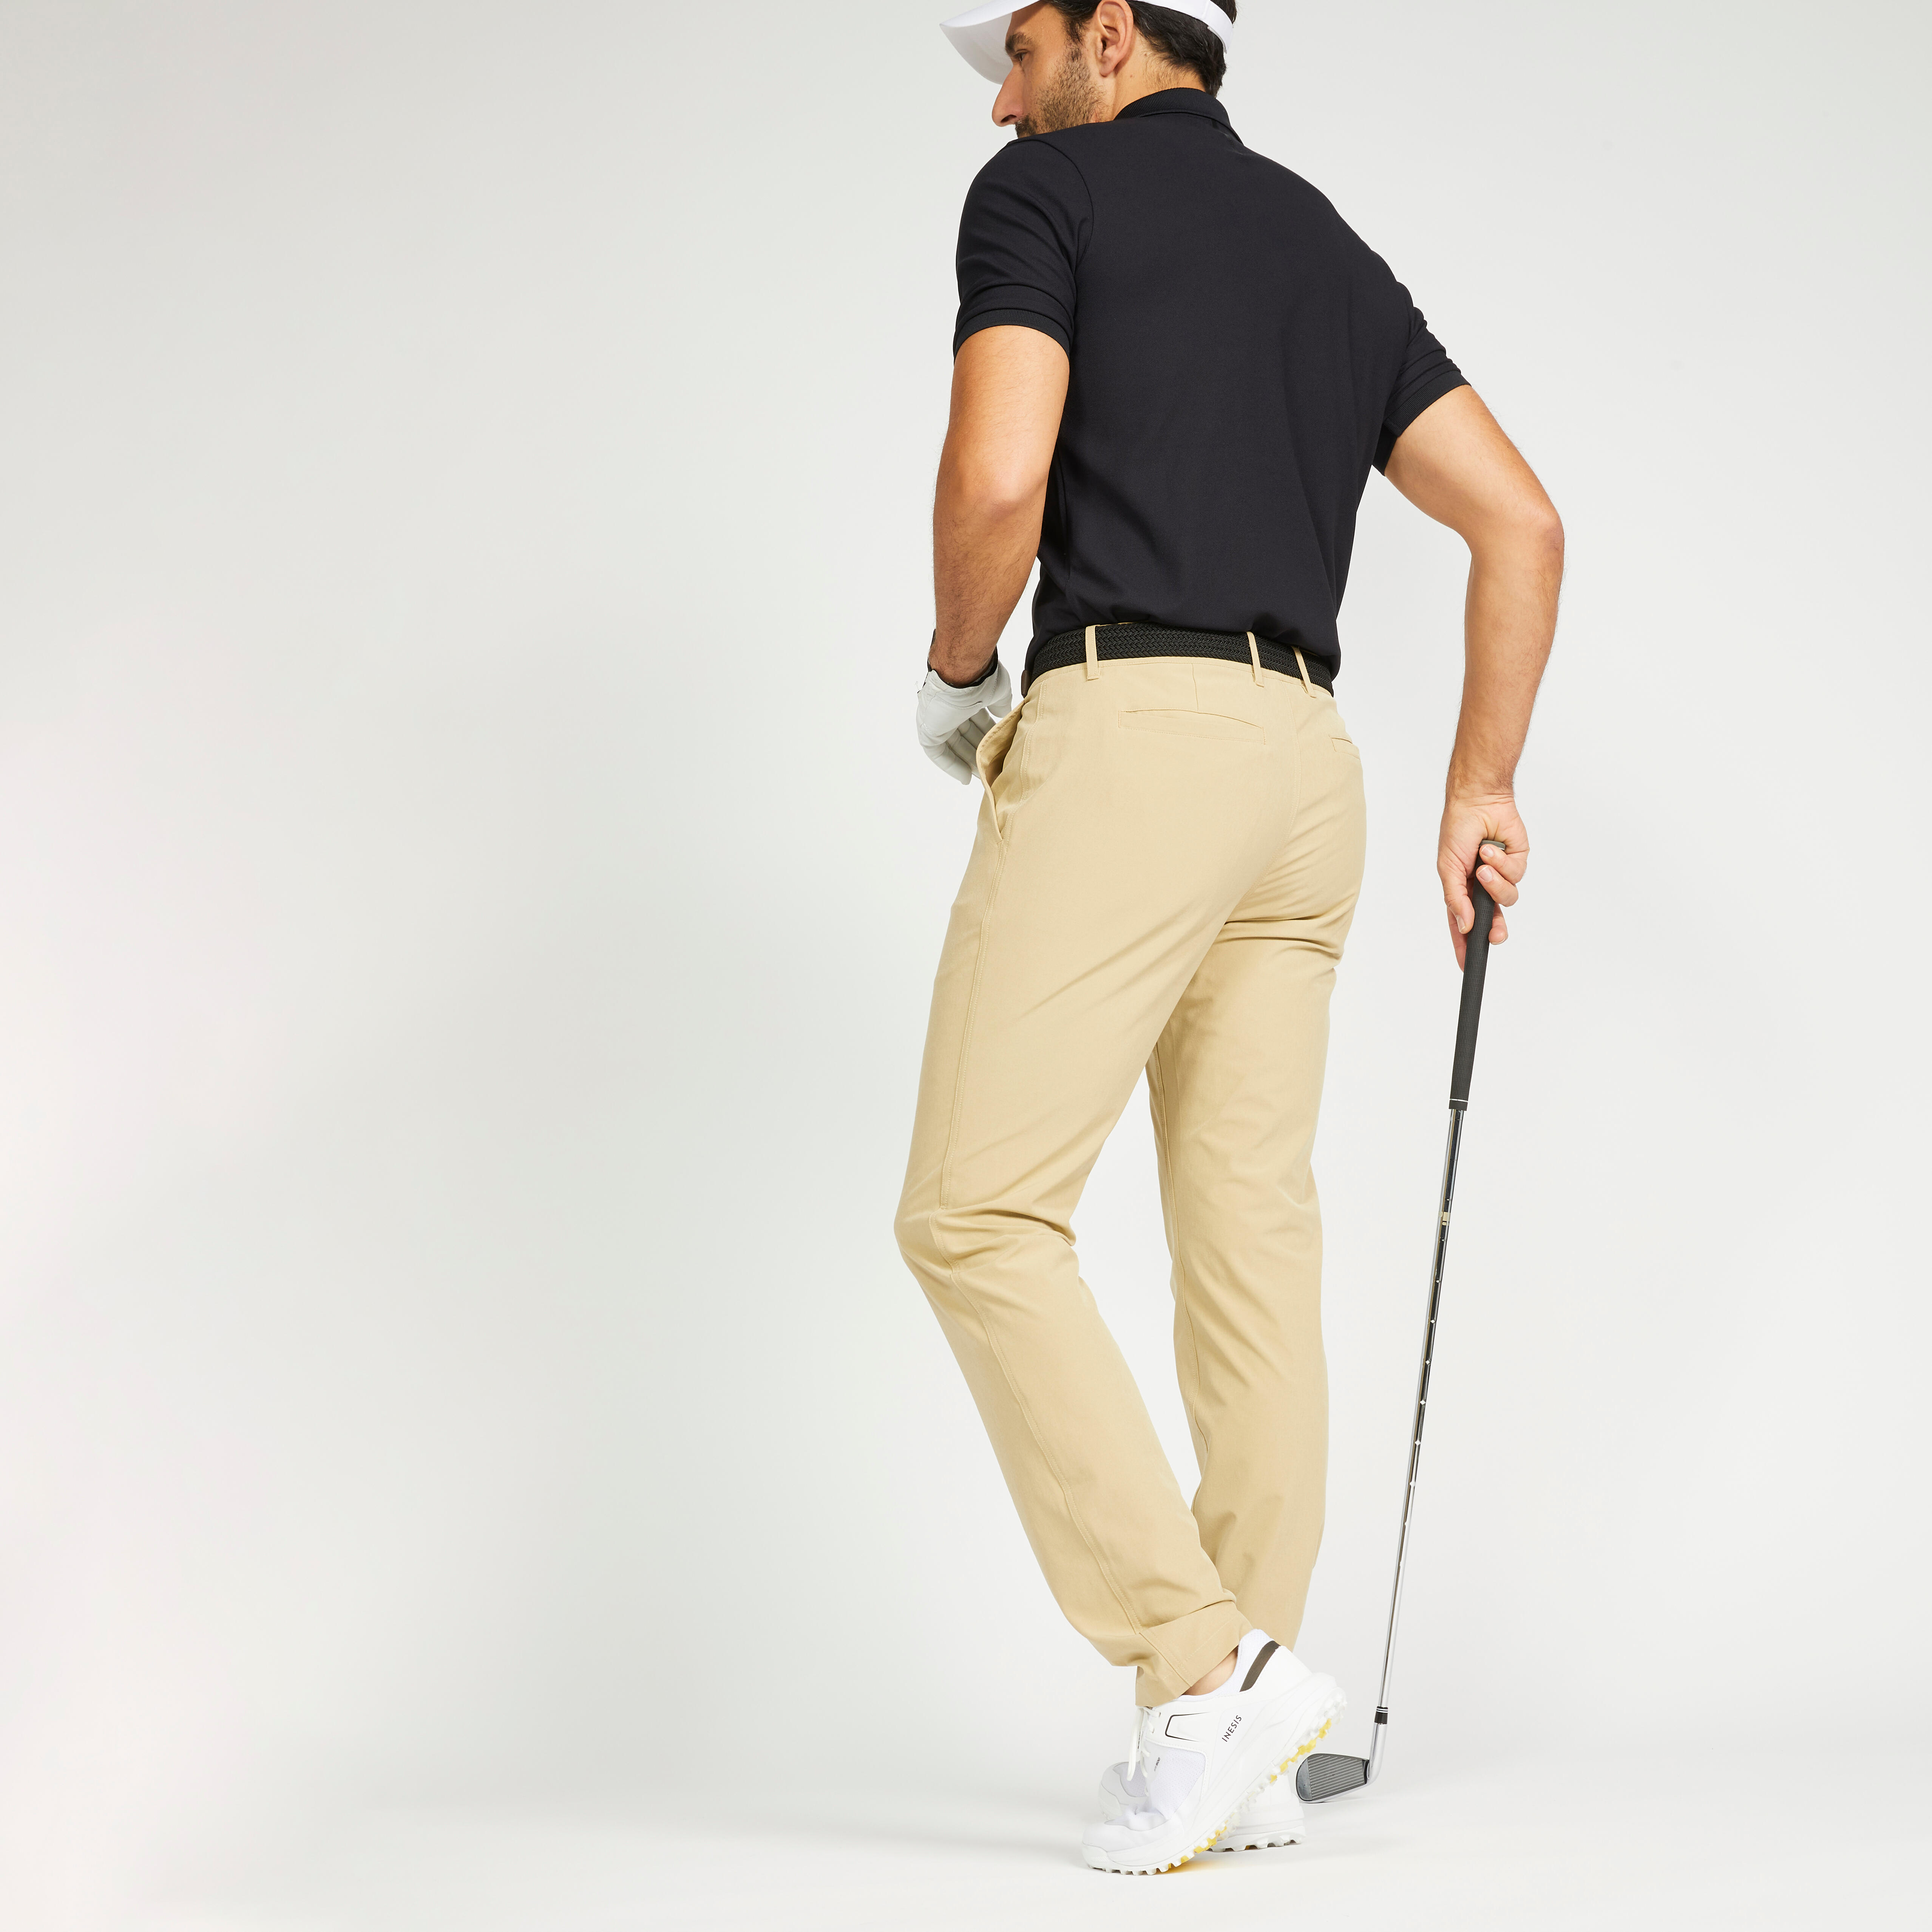 Men's golf trousers - WW 500 grey INESIS | Decathlon